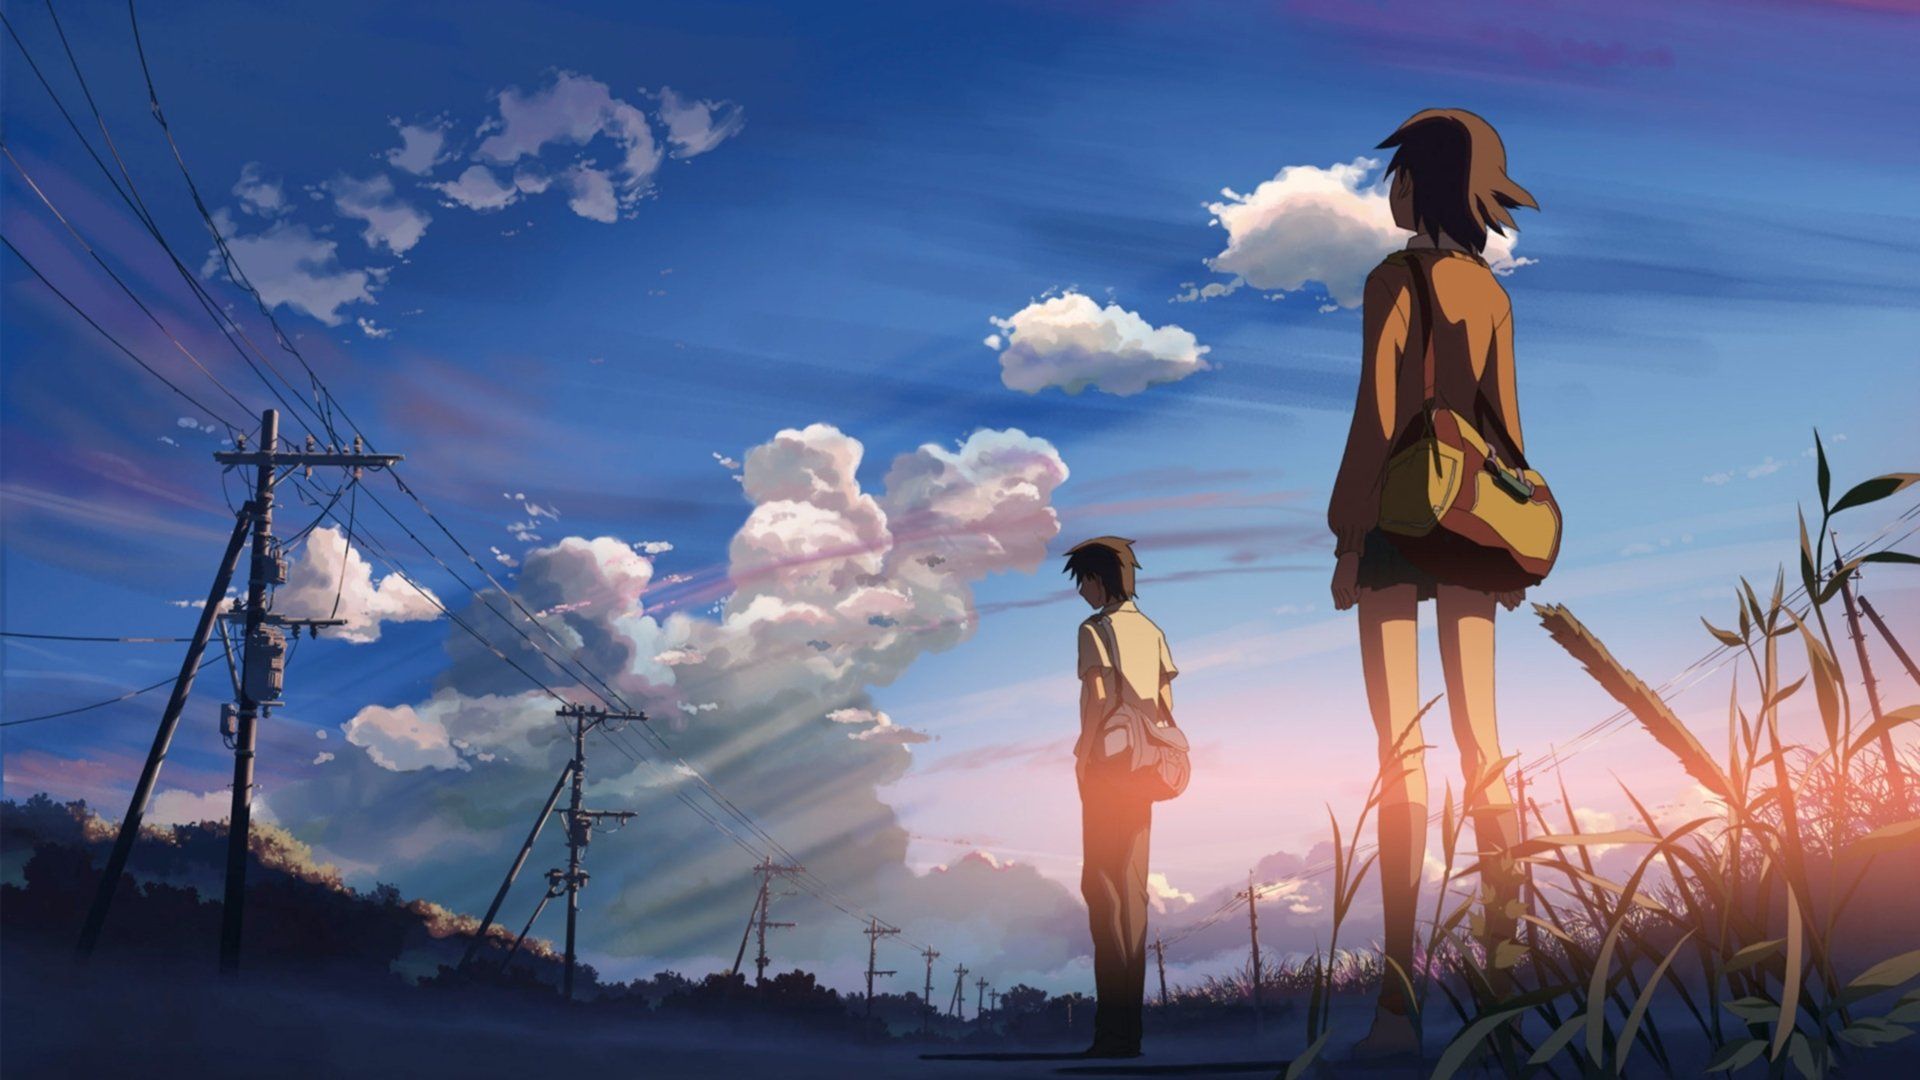 Aesthetic Anime Wallpaper: Image, Anime Category